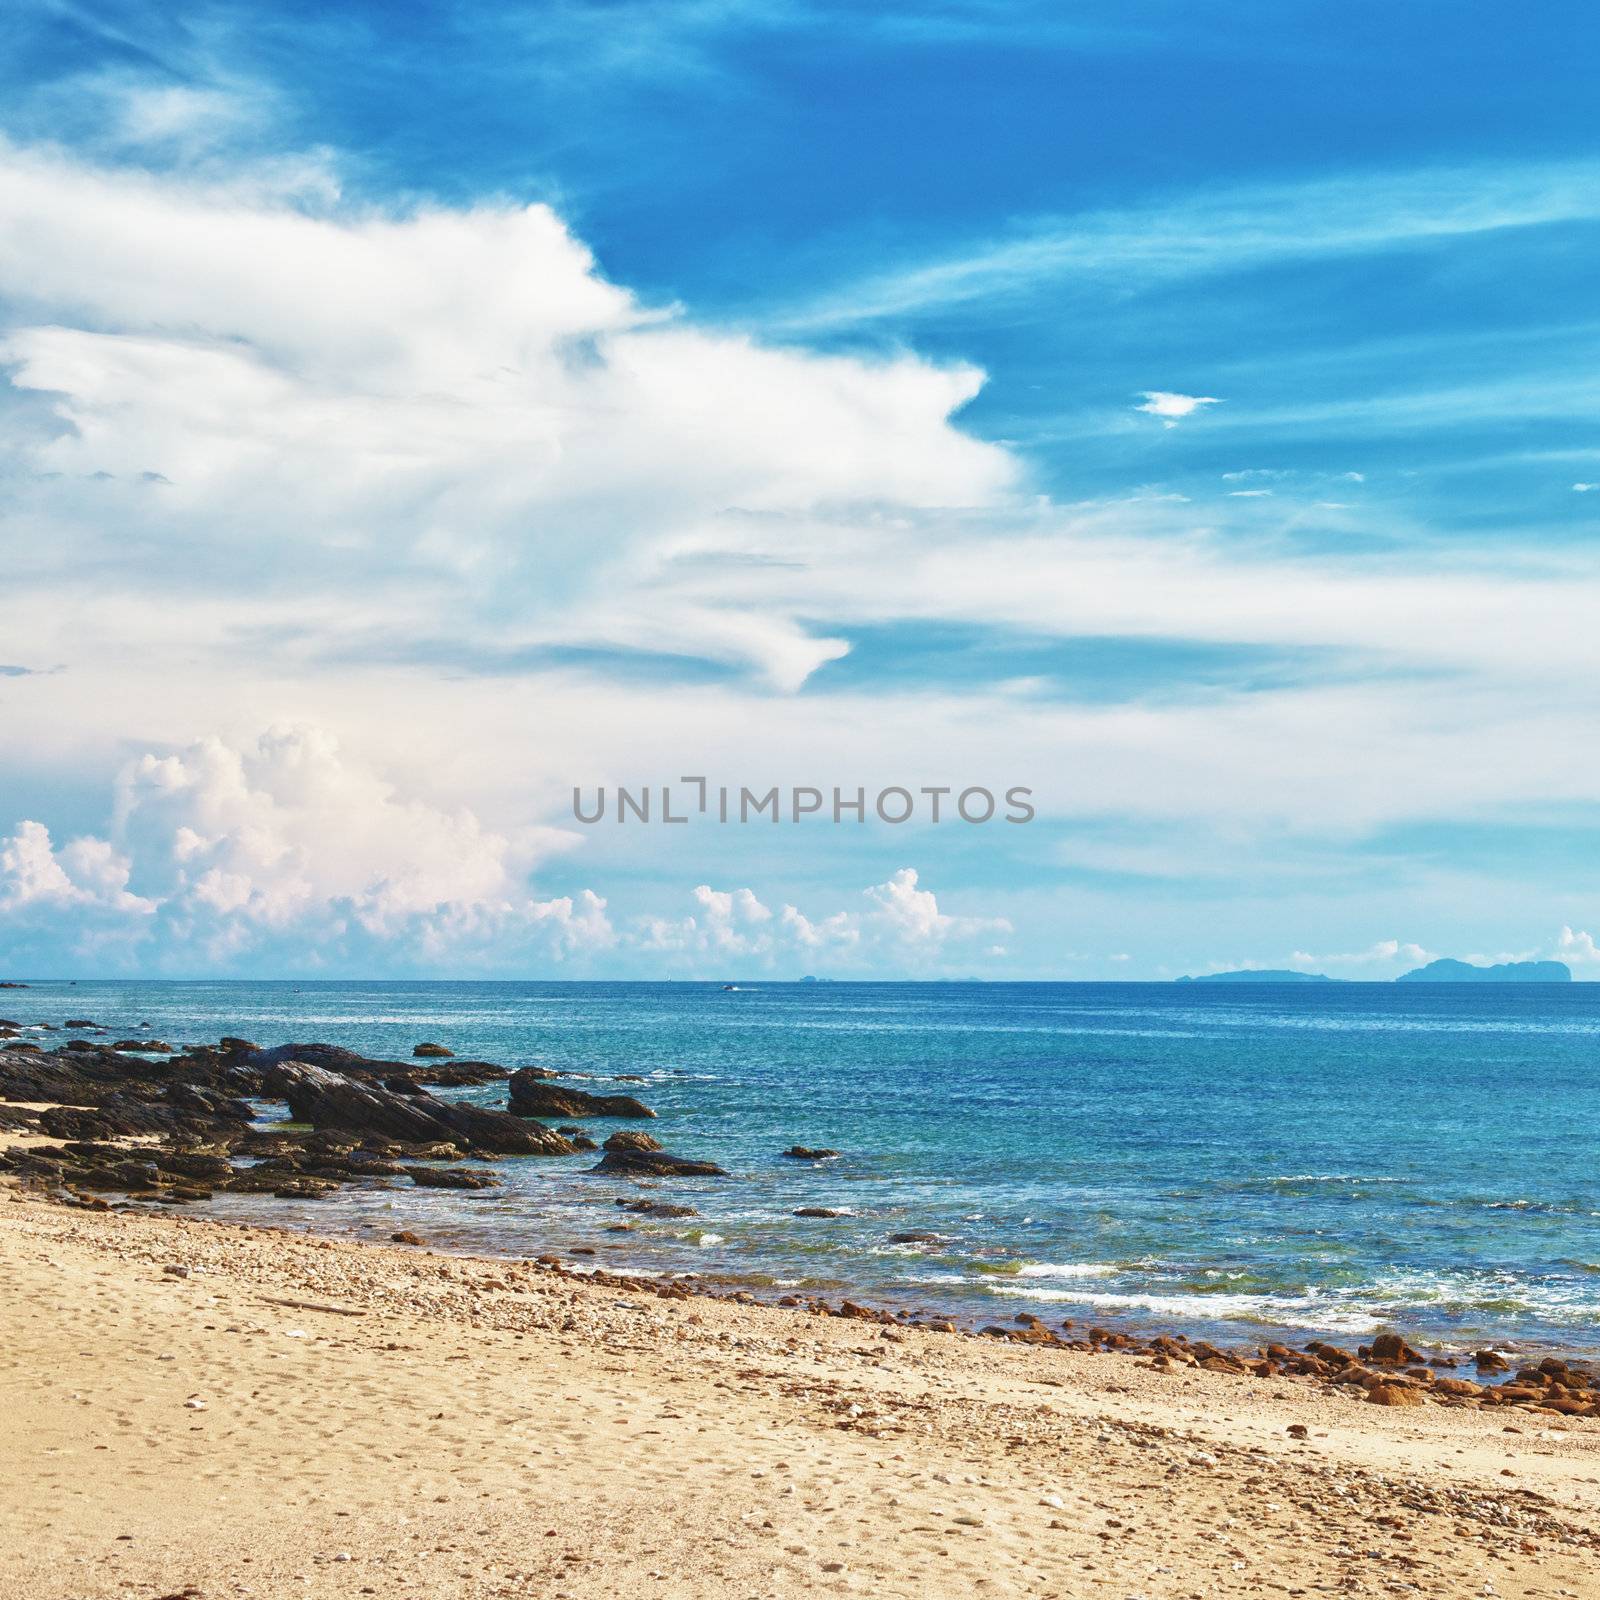 sunny beach with rocks, Andaman Sea, Thailand